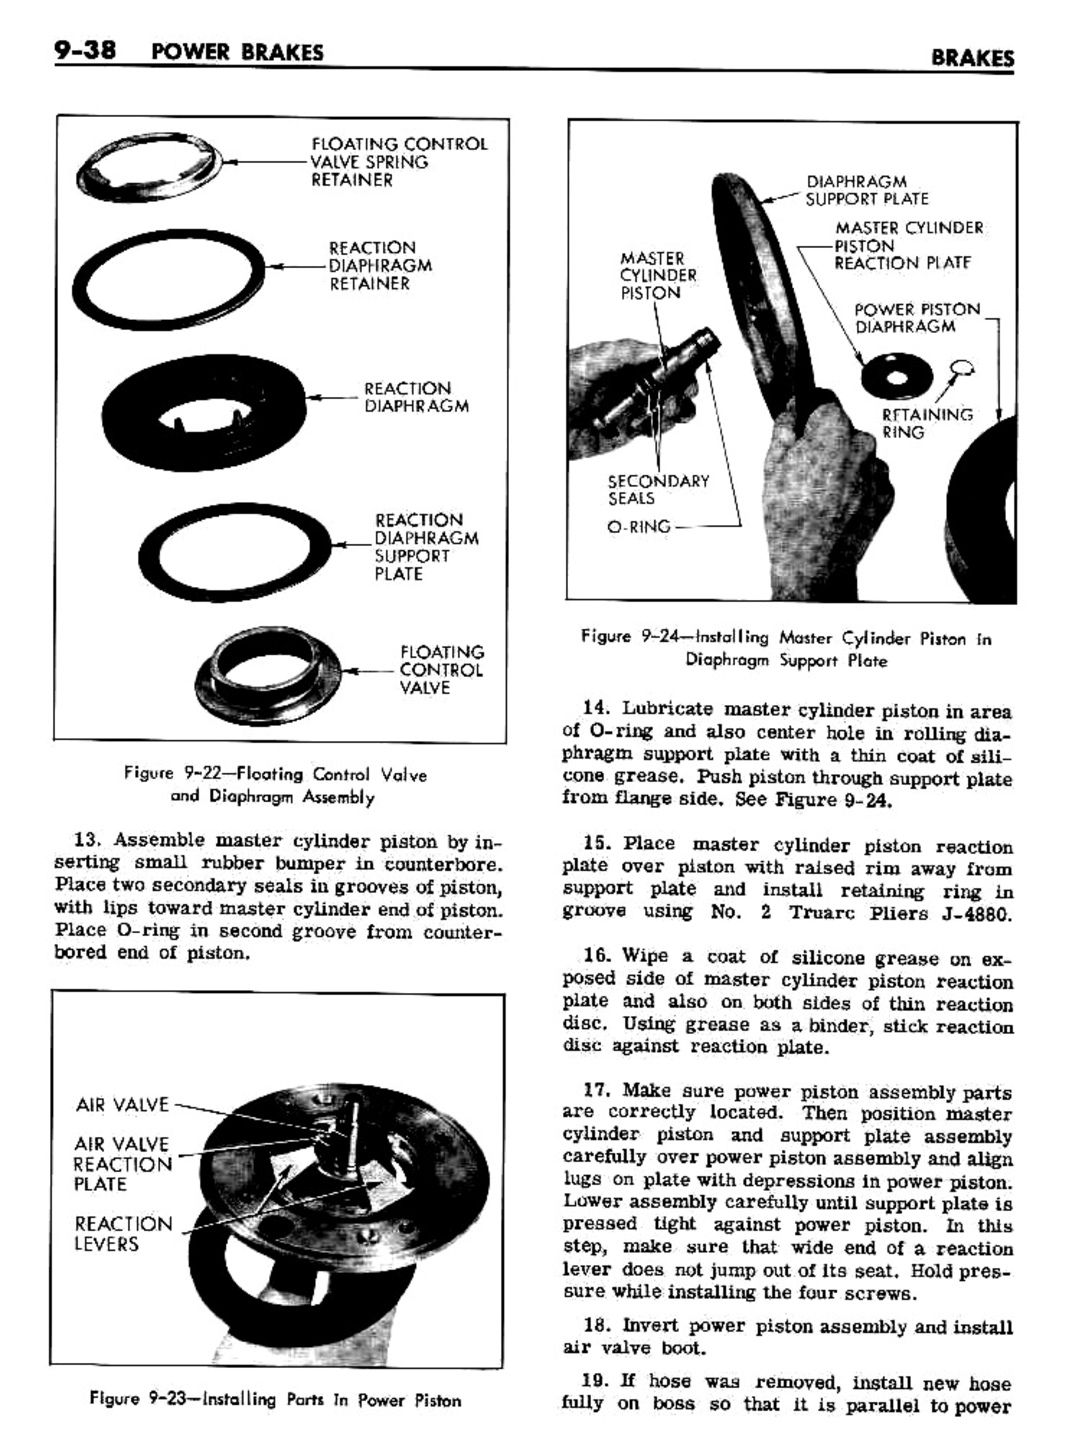 n_09 1961 Buick Shop Manual - Brakes-038-038.jpg